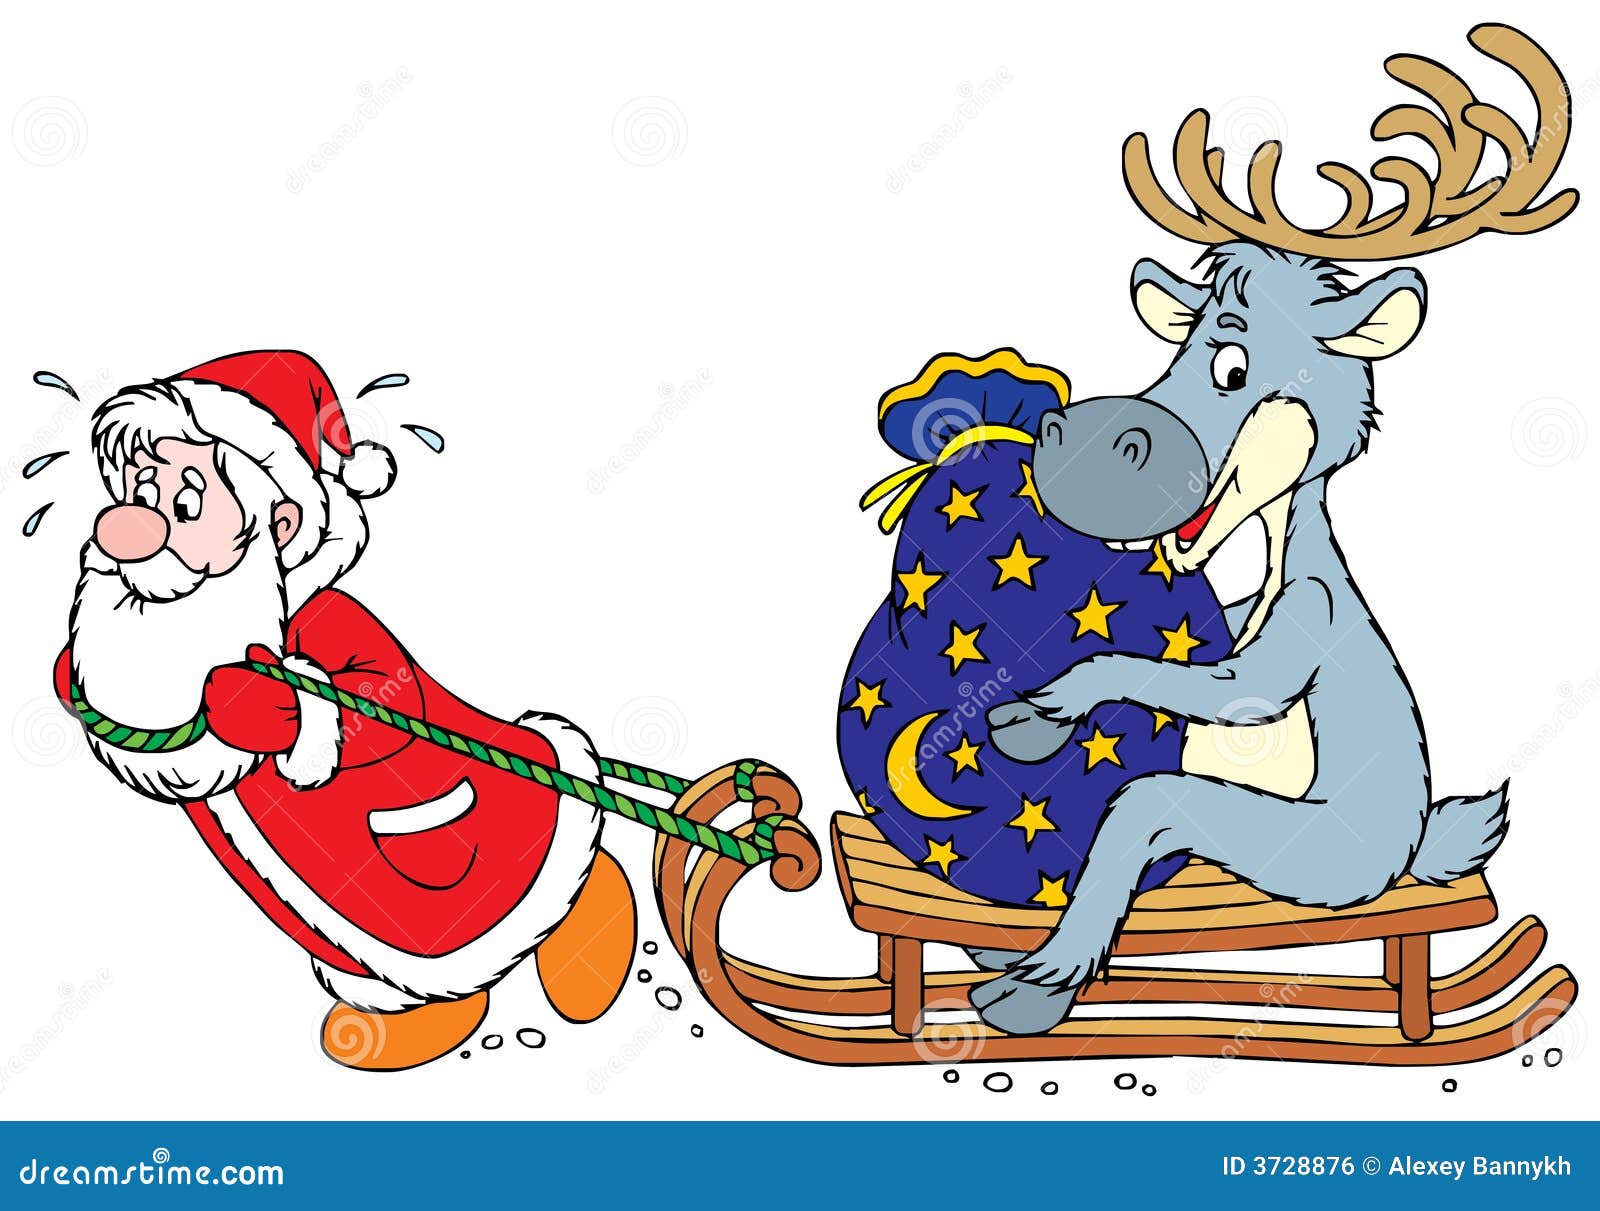 santa clipart and reindeer - photo #25